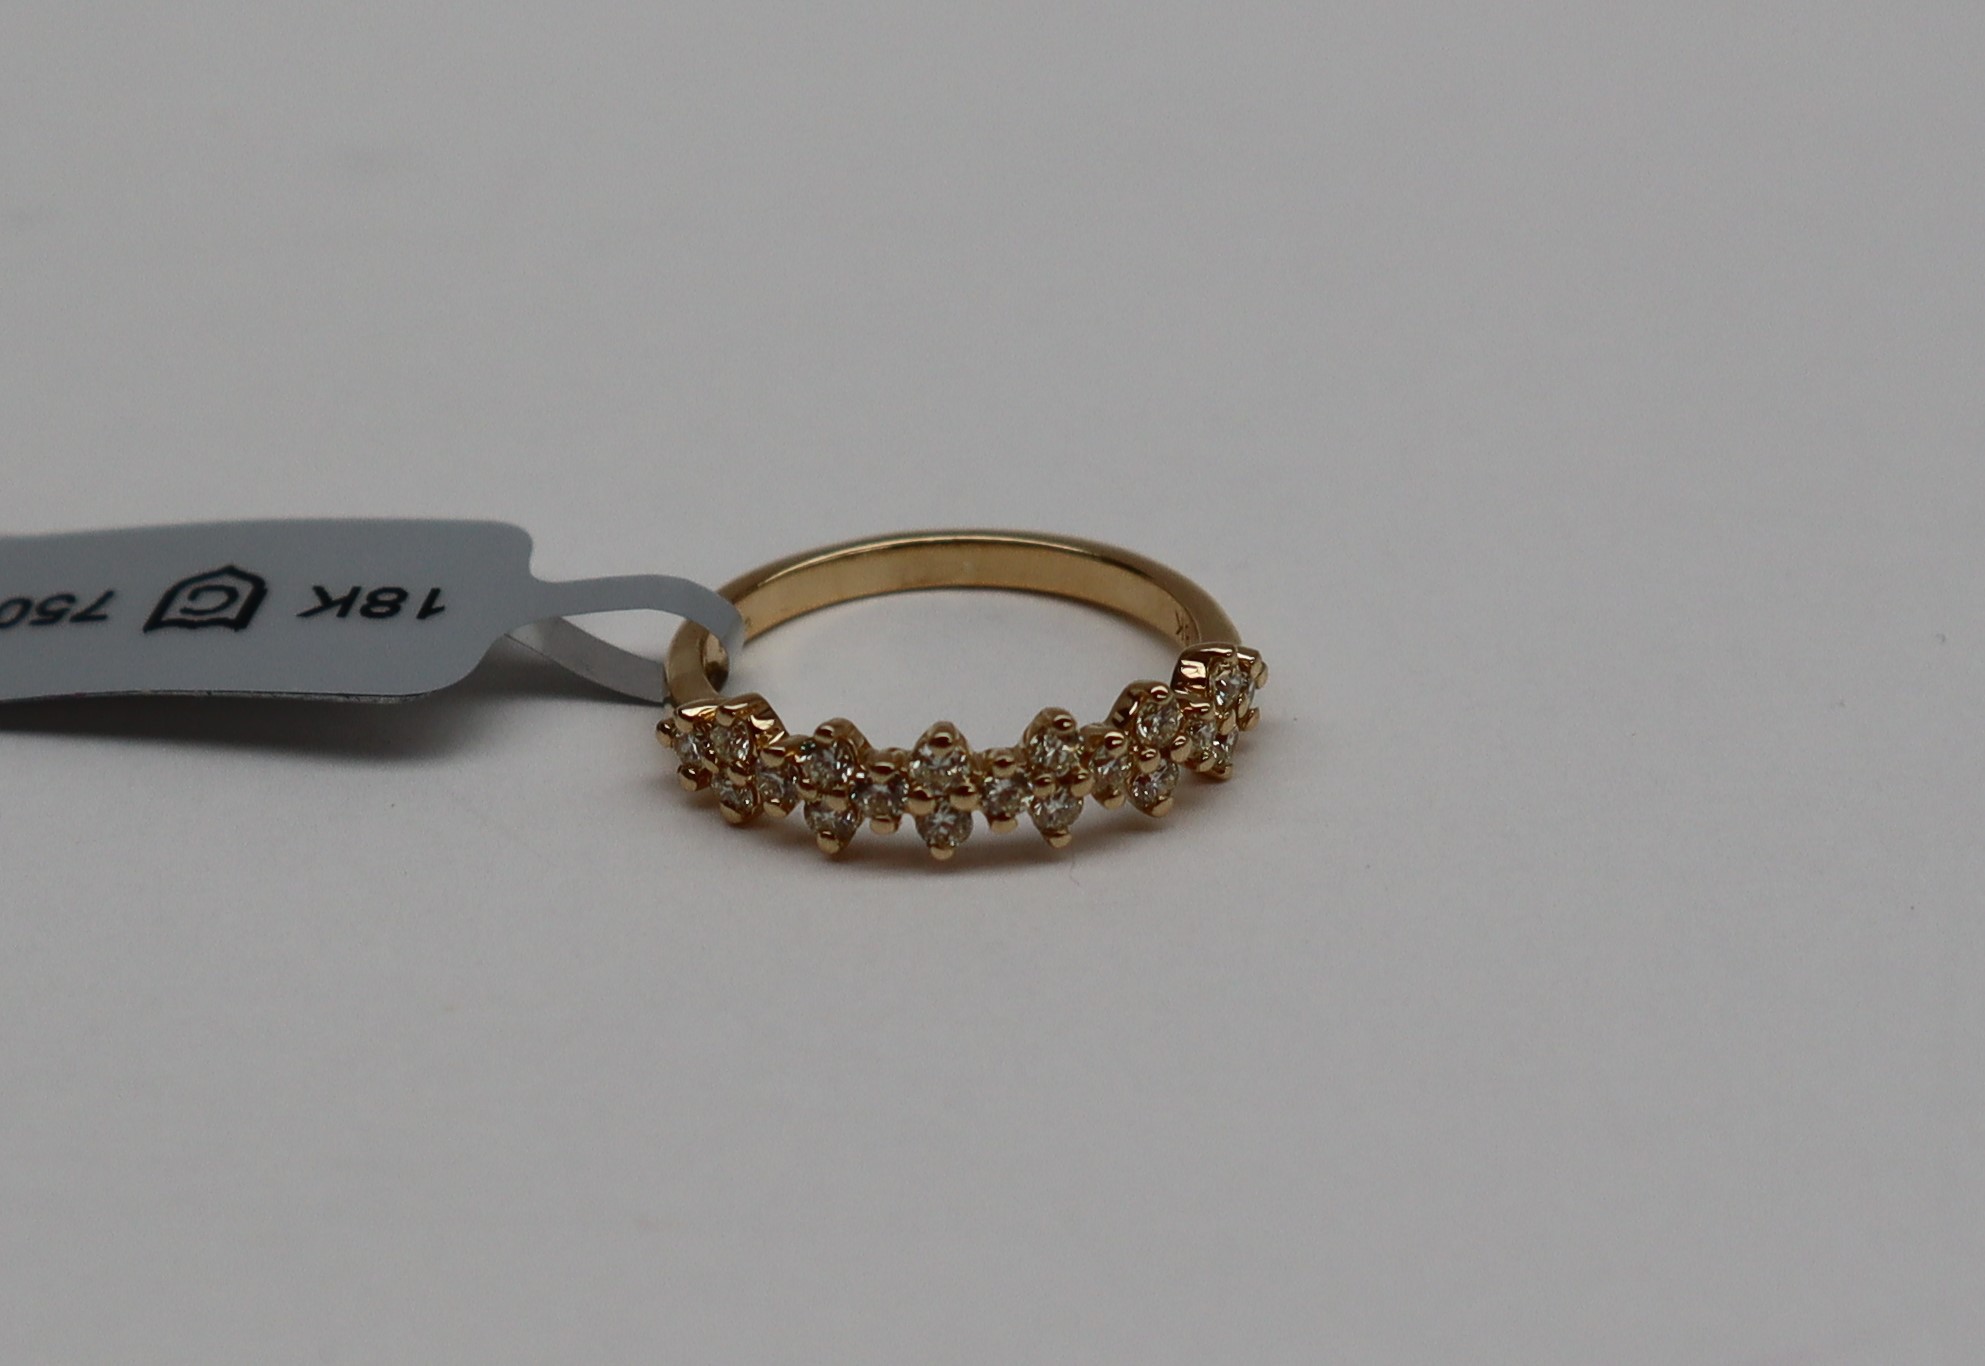 Gemporia - An 18k gold natural yellow diamond Tomas Rae ring, set with nineteen round diamonds, - Image 3 of 5